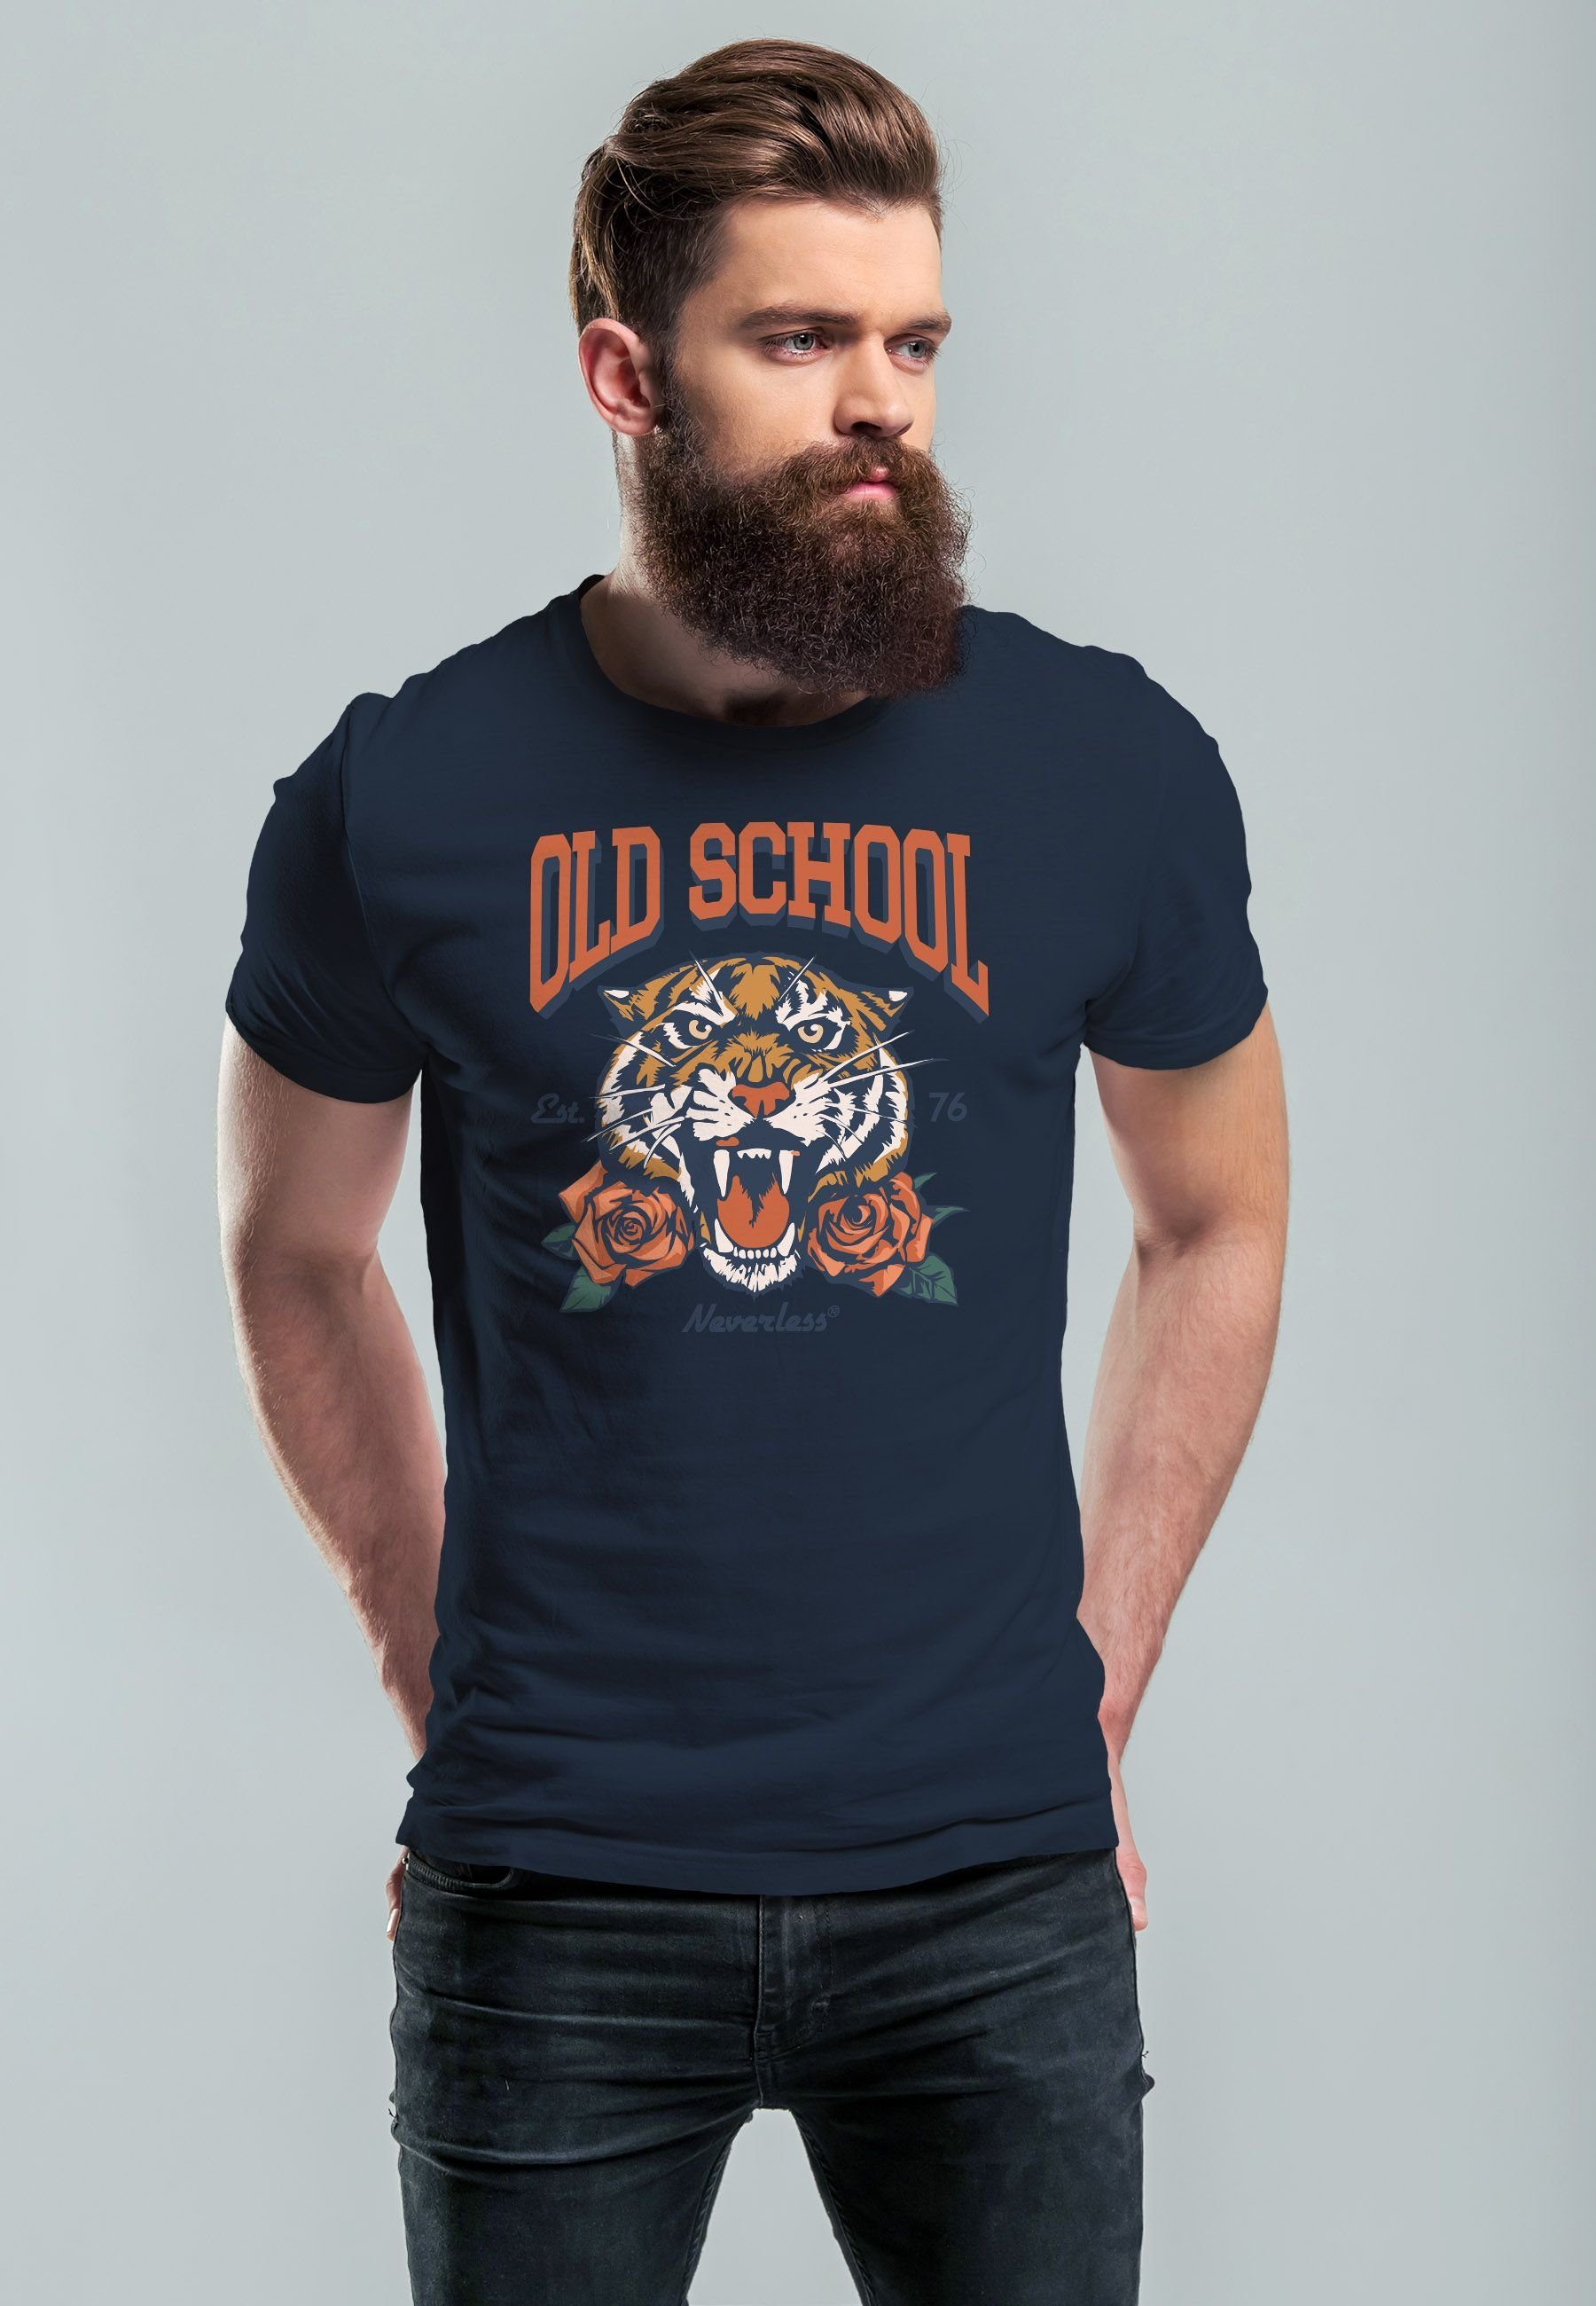 Stre Print Retro Rosen Fashion Print Print-Shirt T-Shirt Vintage mit Herren Neverless Tiger navy School Old